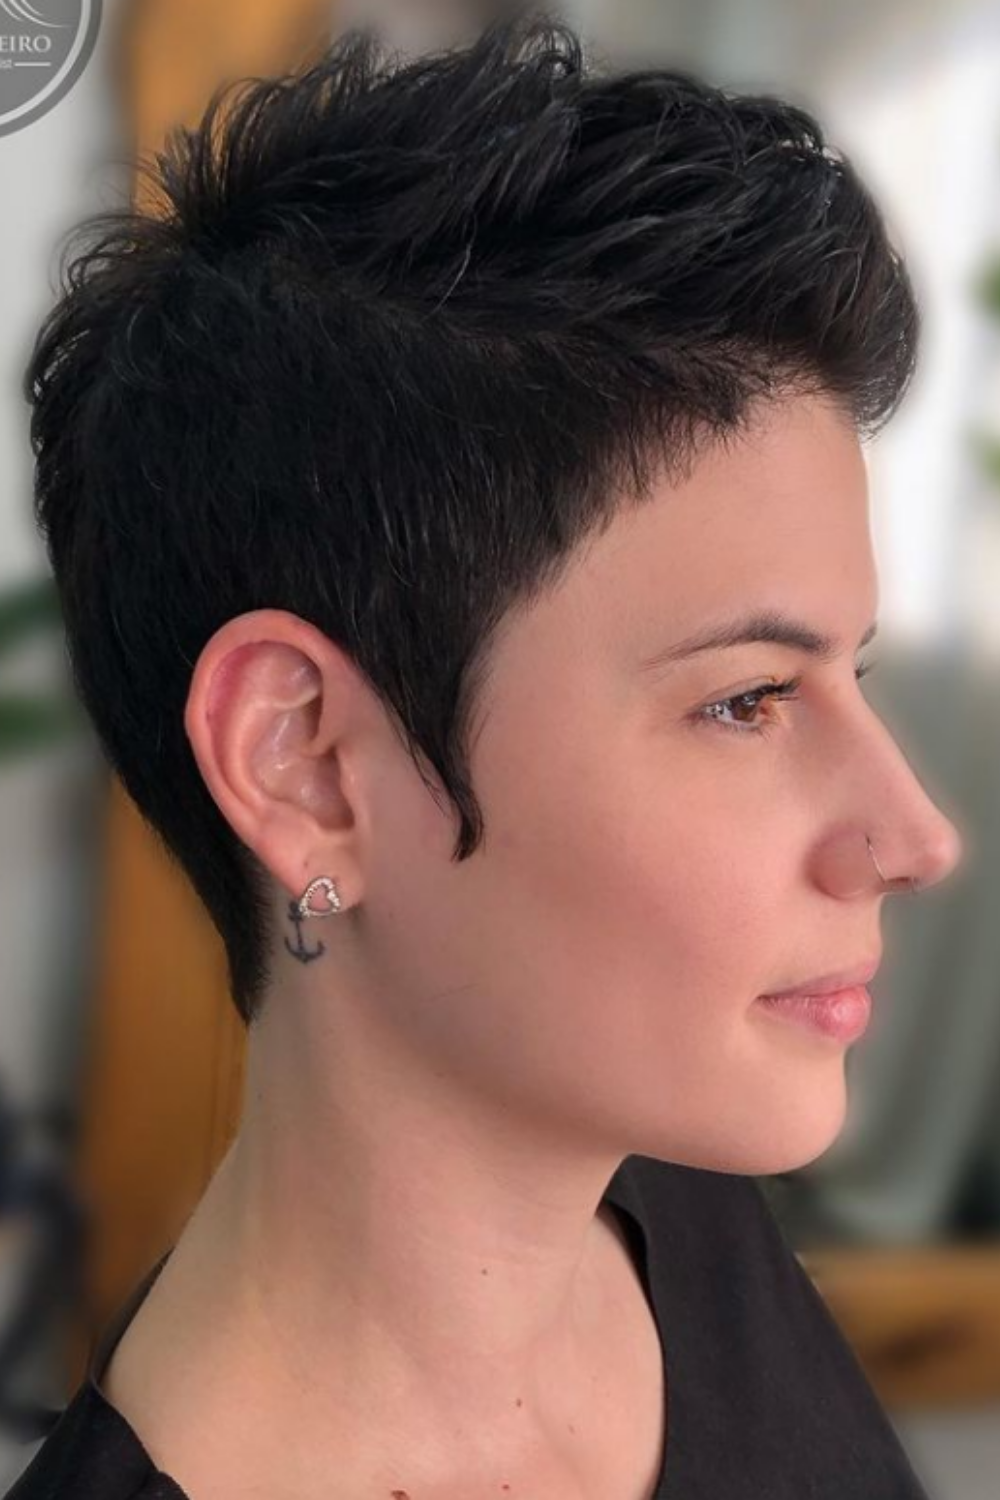 Pixie haircuts for women | Ideas That’ll Make You Want Short Hair